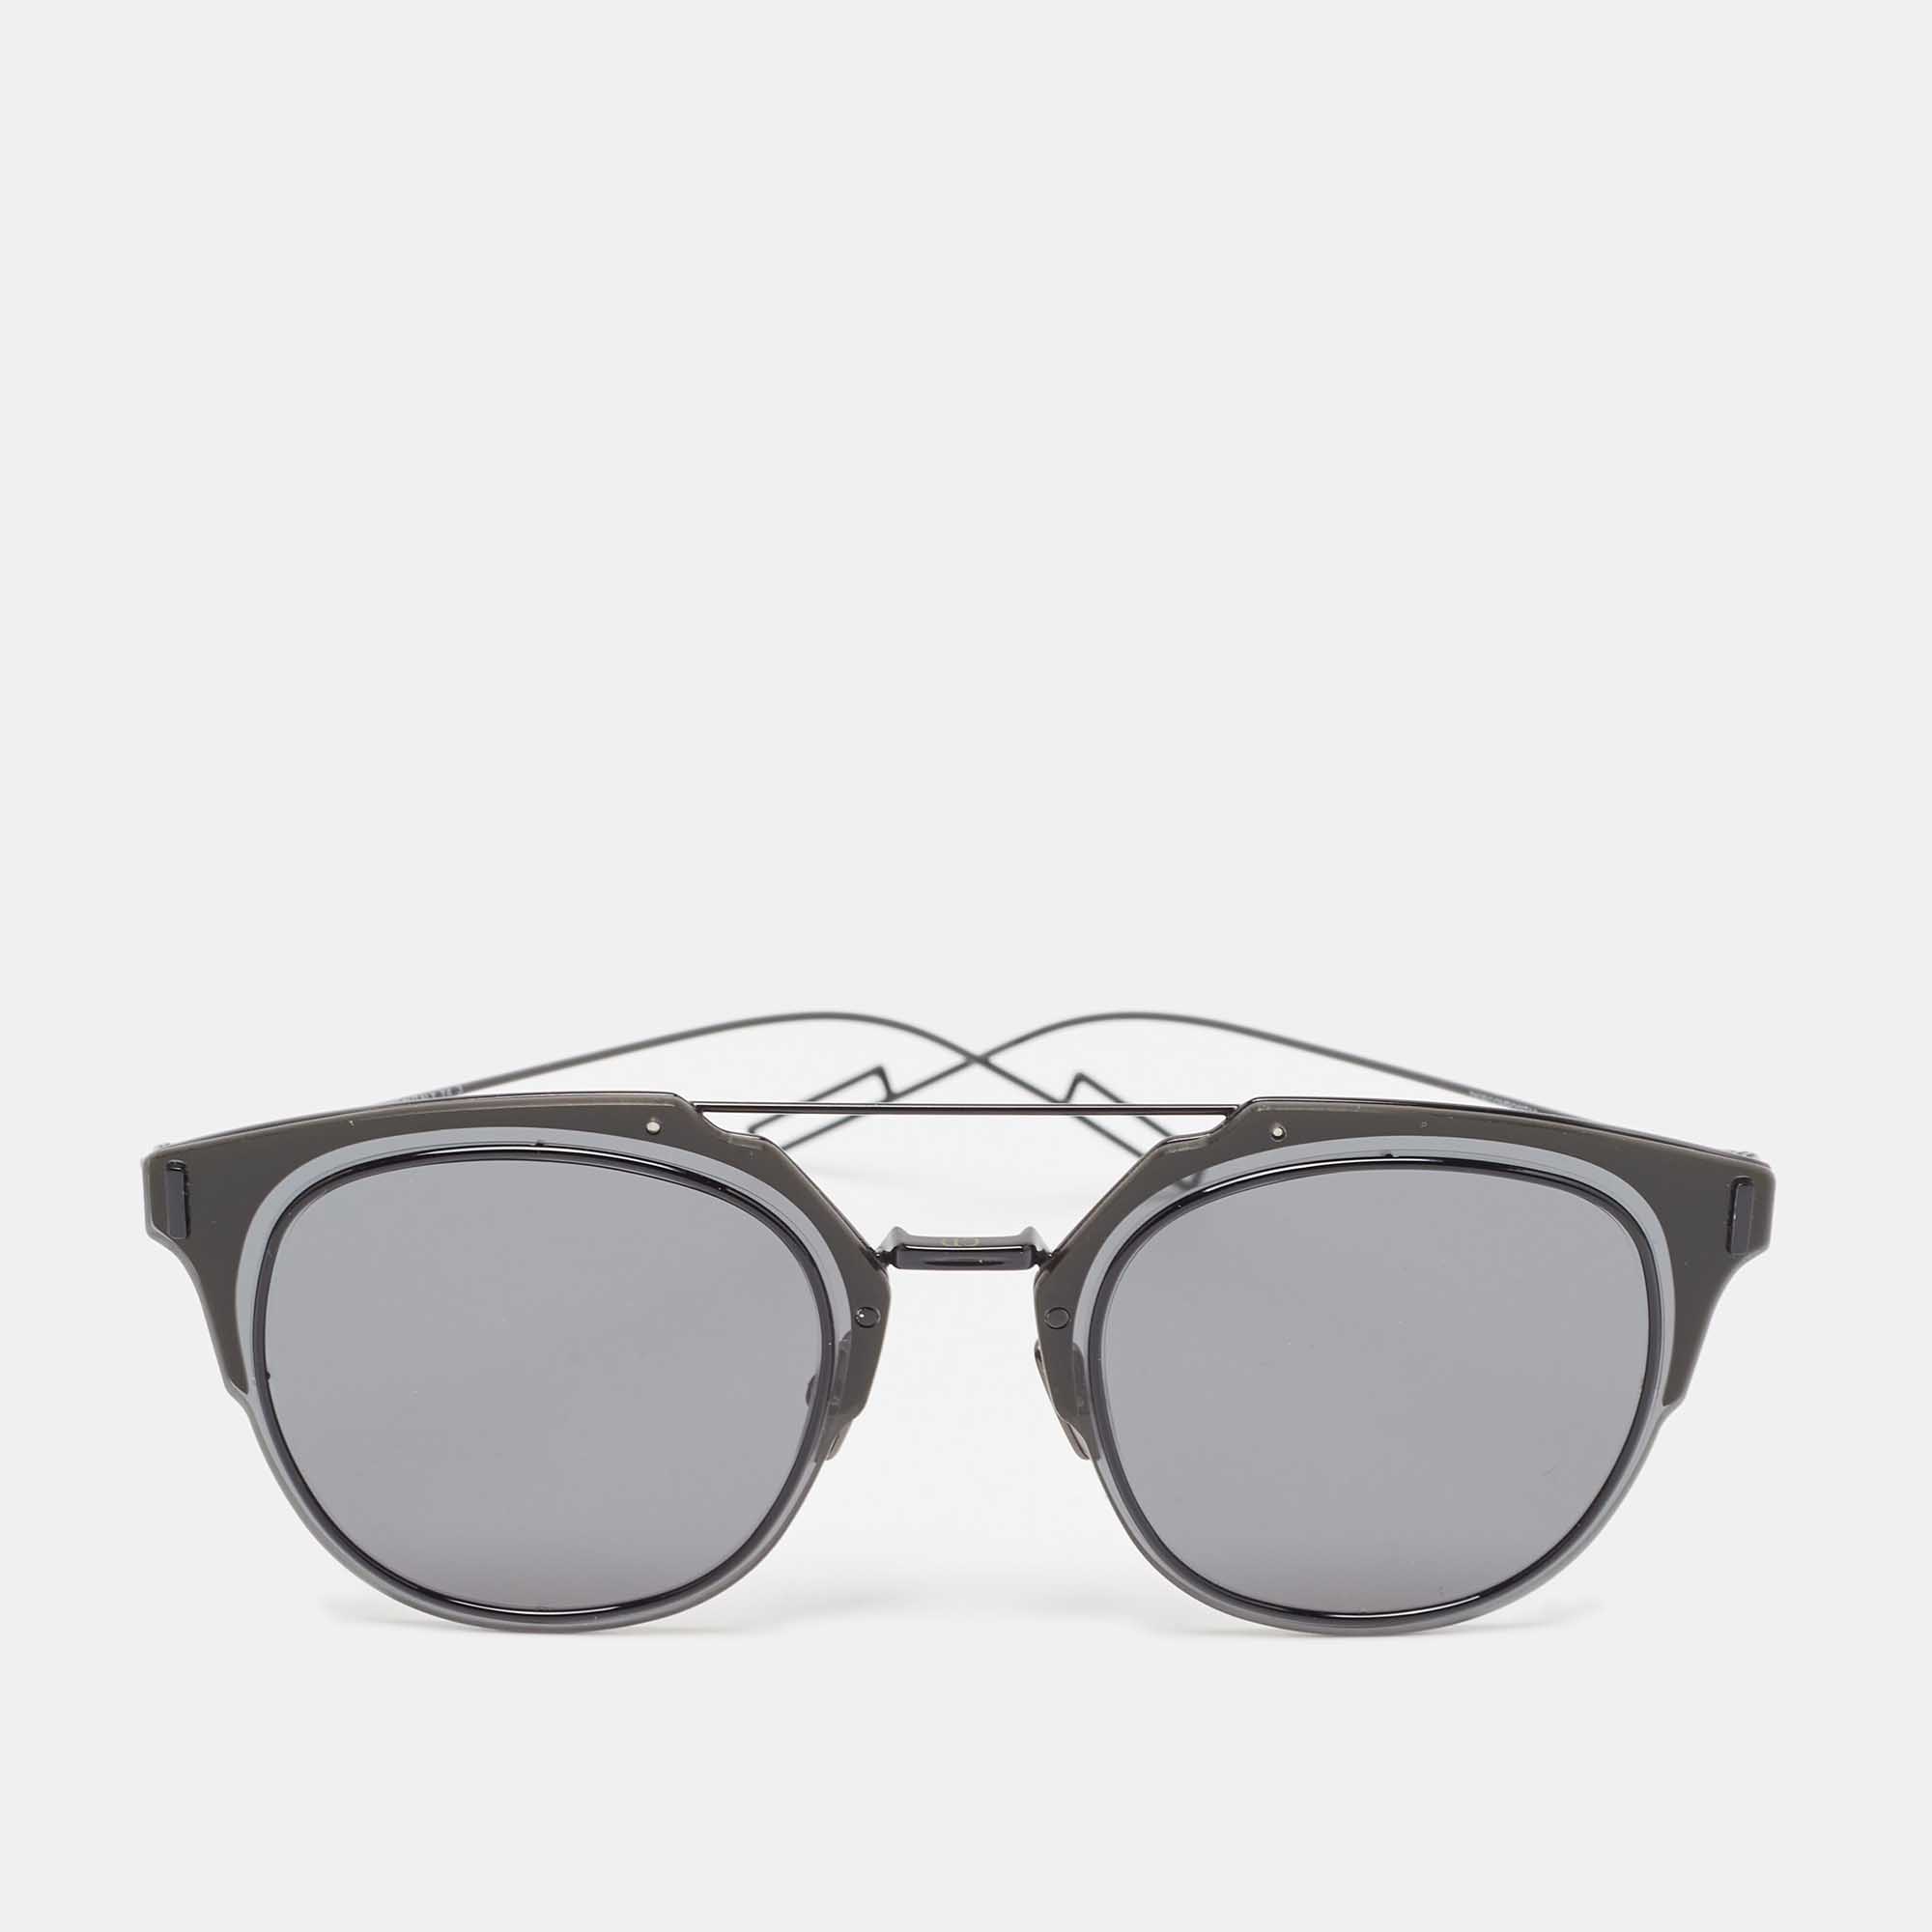 

Dior Homme Black Composit 1.0 Wayfarer Sunglasses